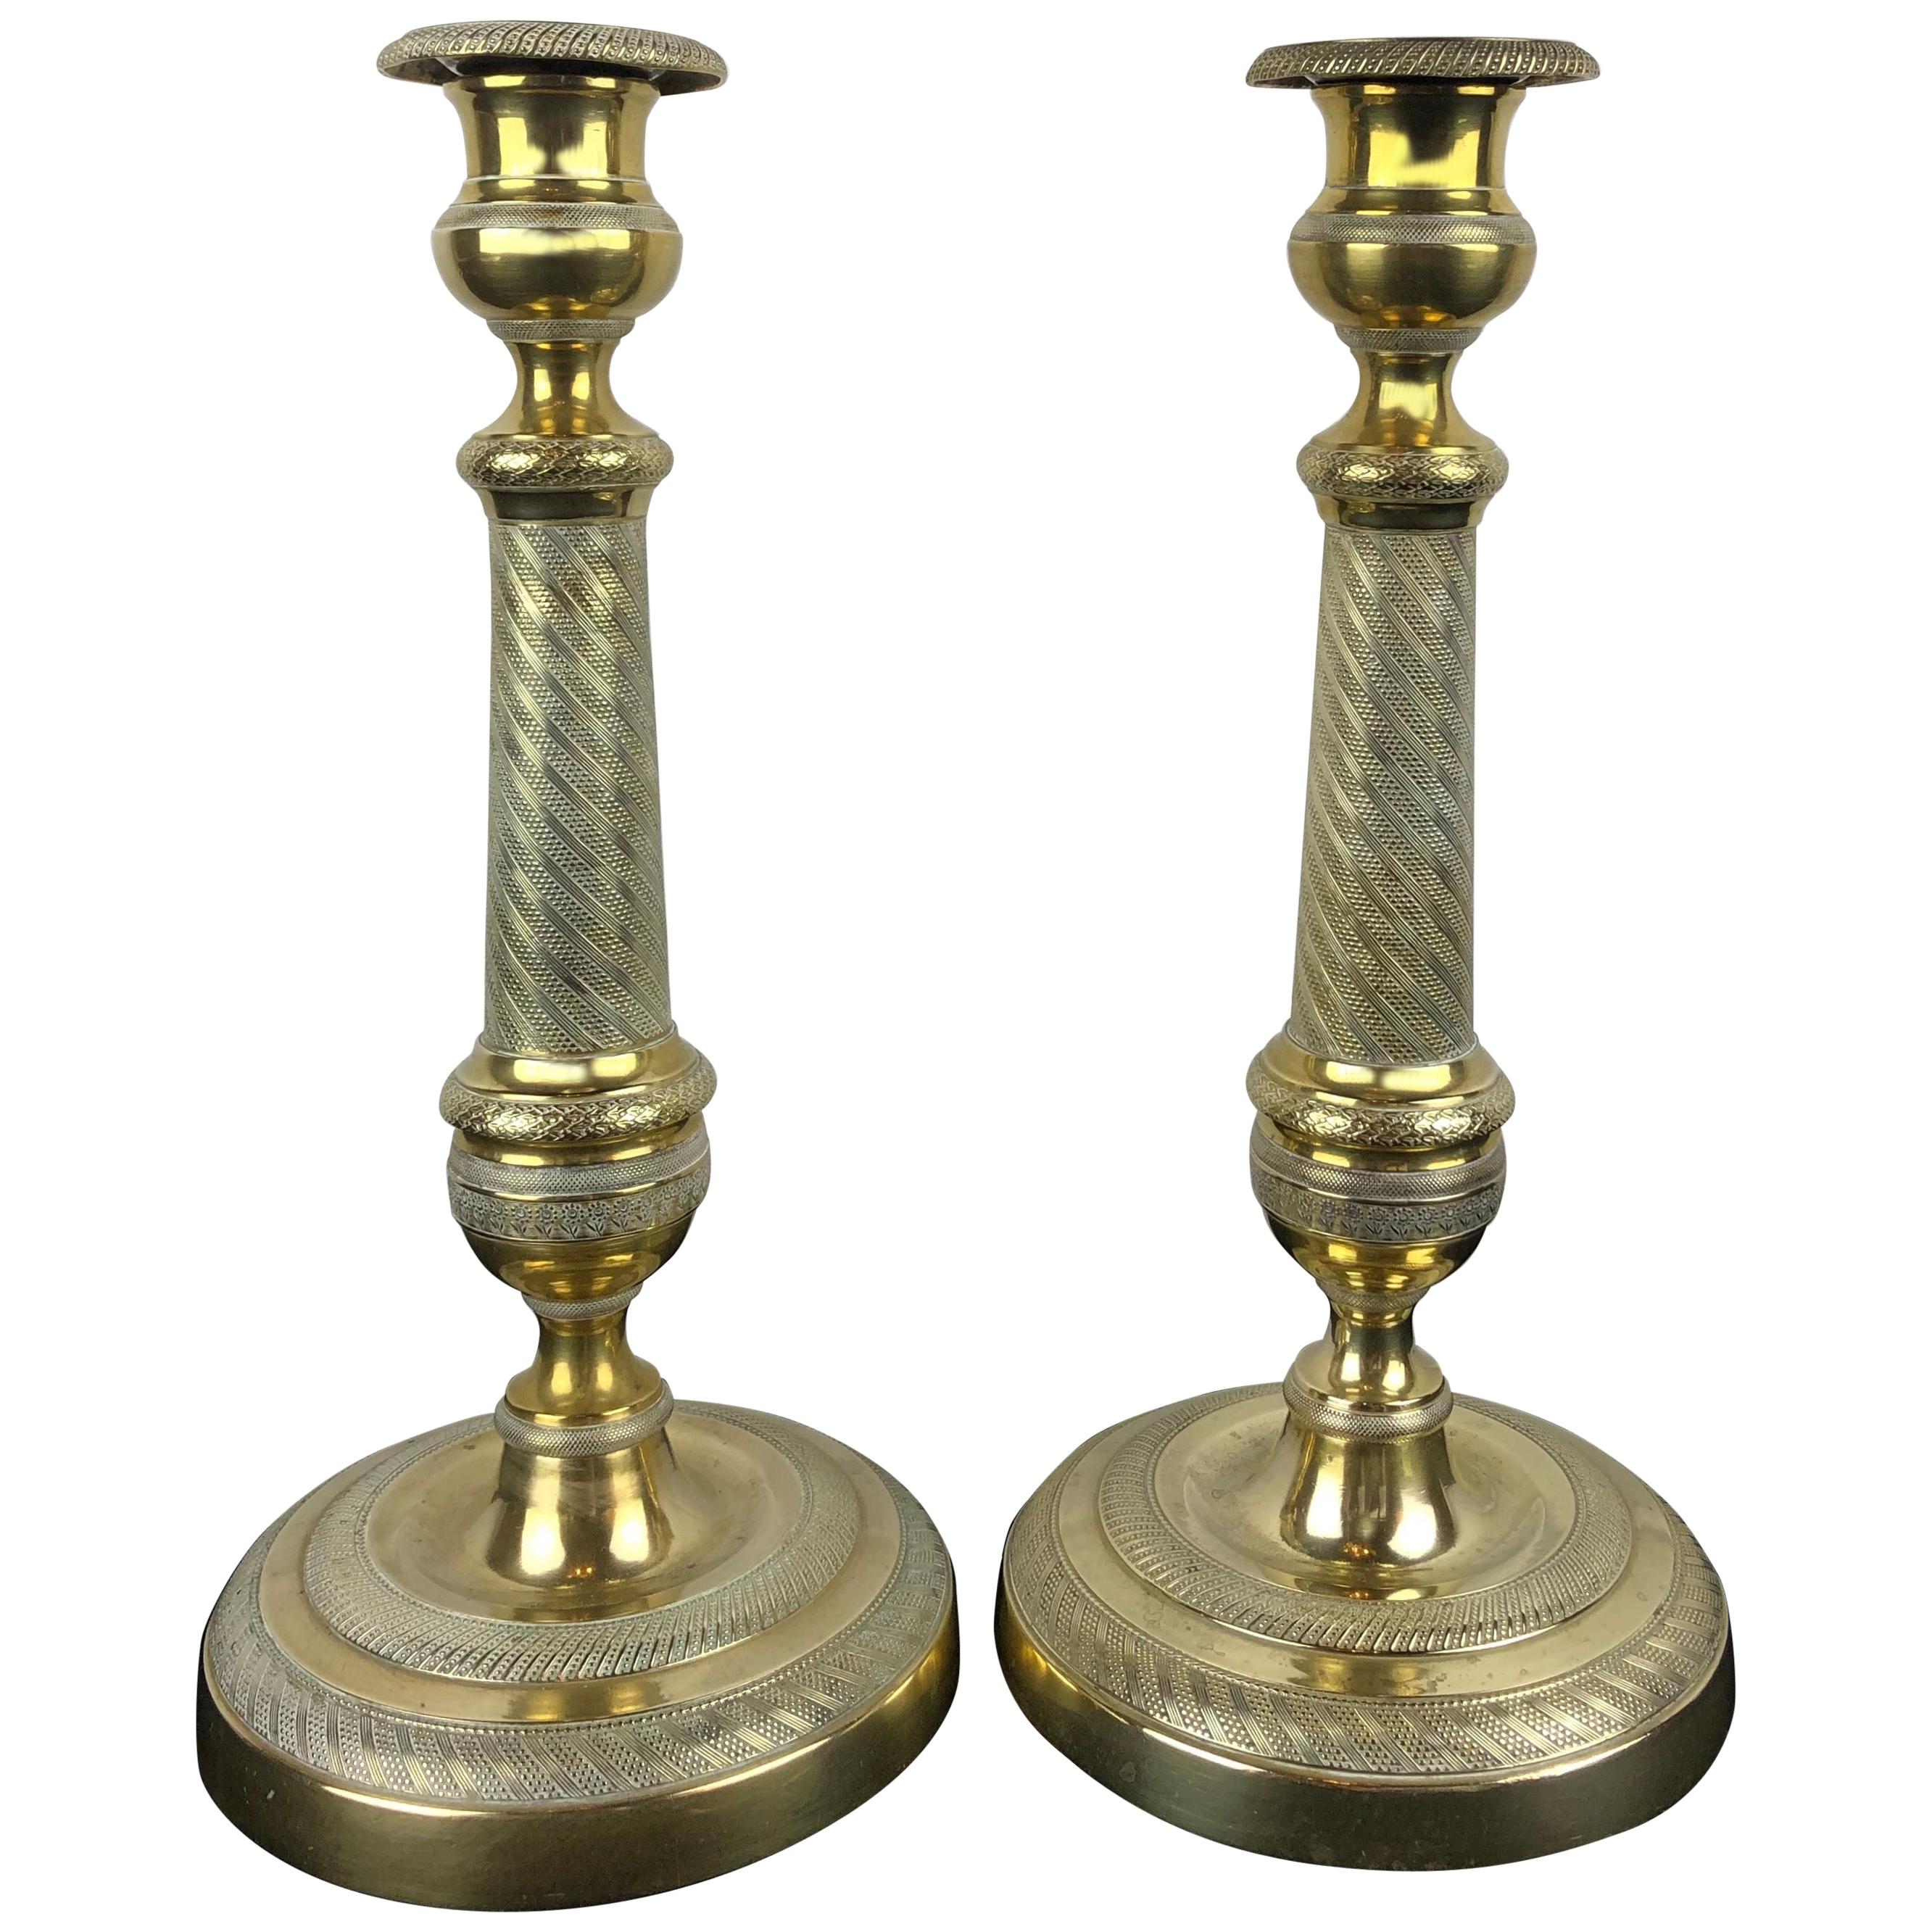 Feines Paar Empire-Kerzenhalter aus vergoldeter Bronze des frühen 19